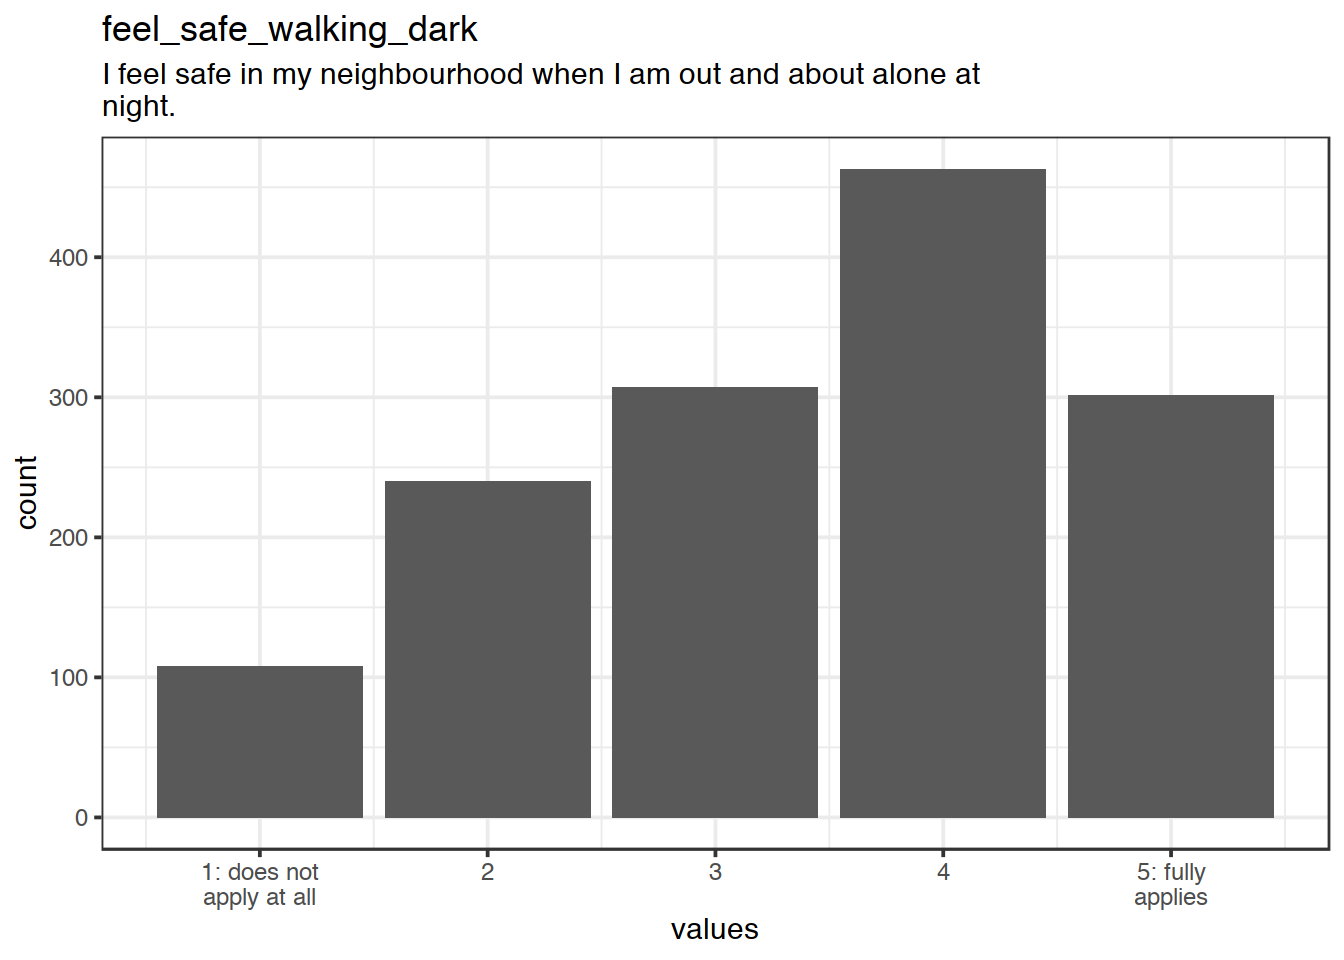 Distribution of values for feel_safe_walking_dark